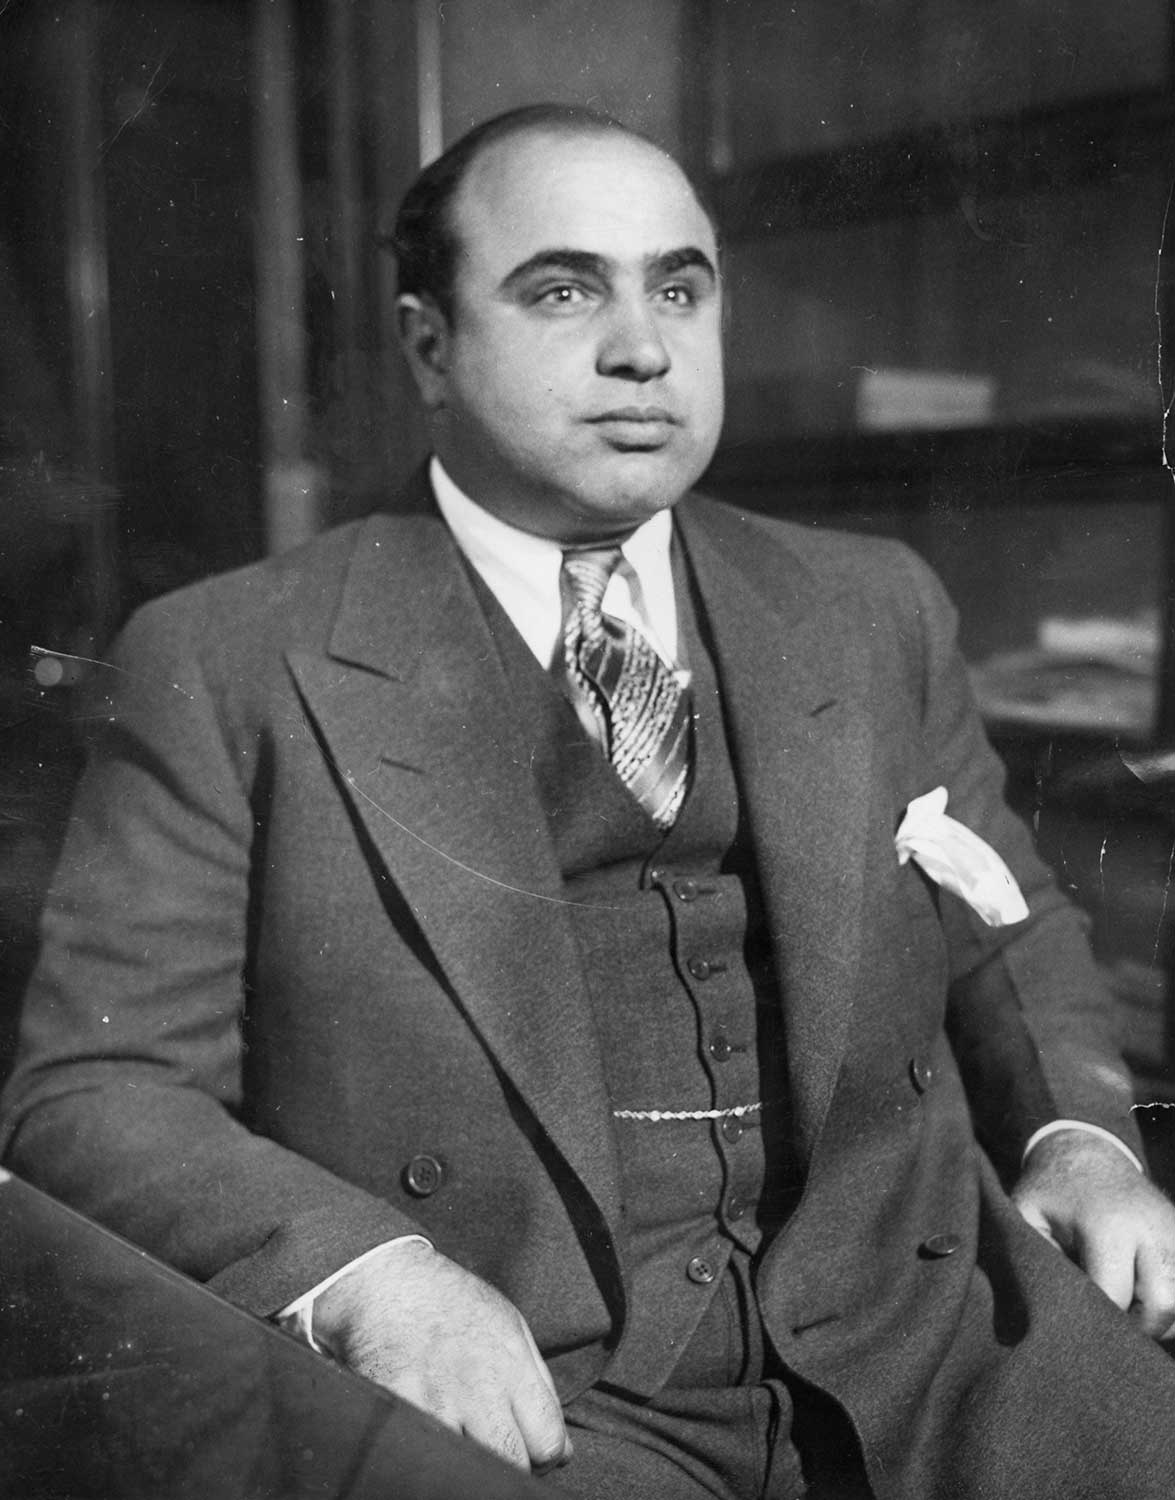 Al Capone wears a three piece suit in the Roaring 20s